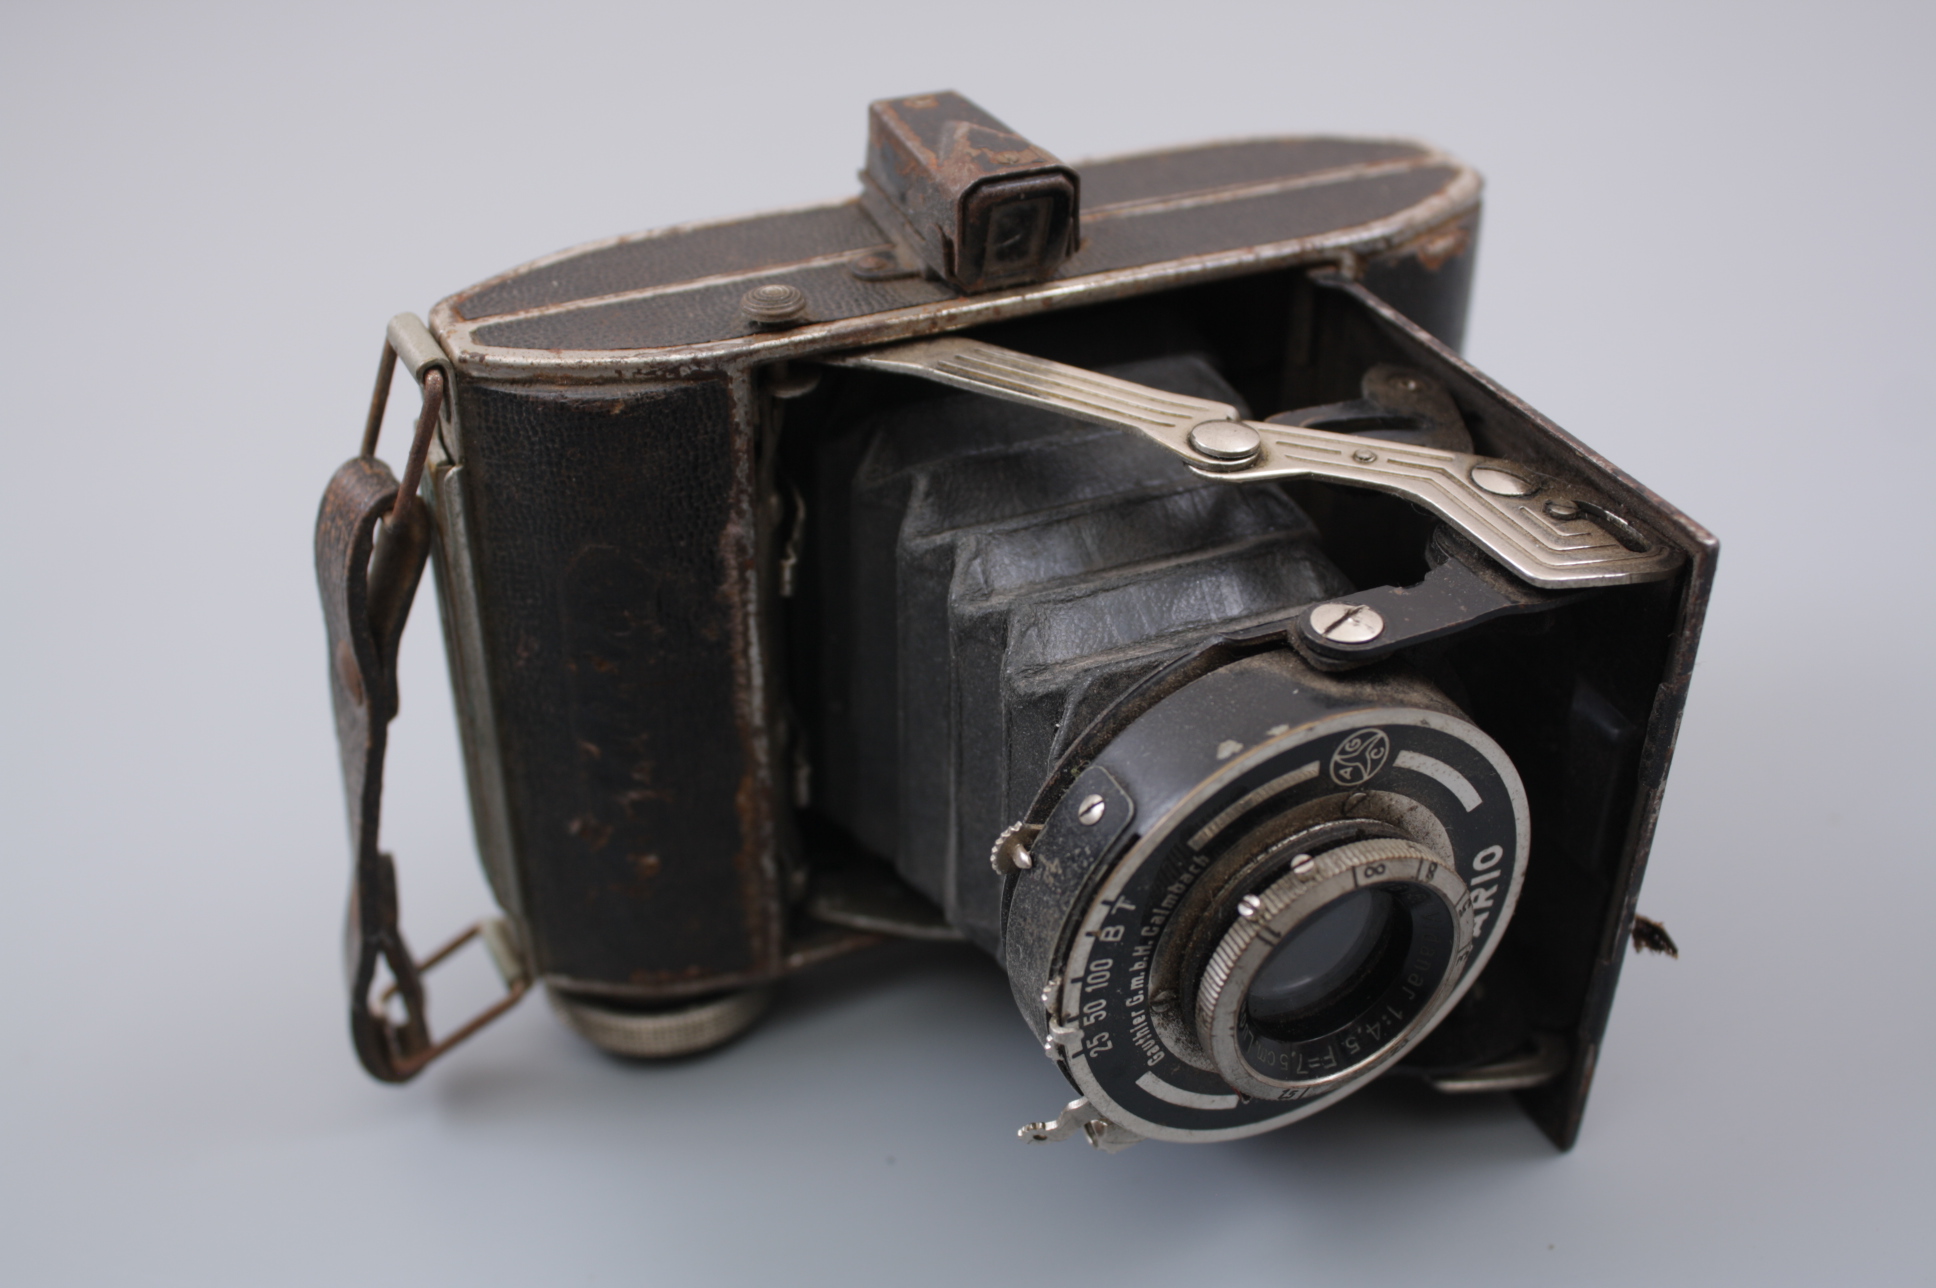 Фотоаппарат VARIO 30-е 40-е гг. 20 века, Германия.